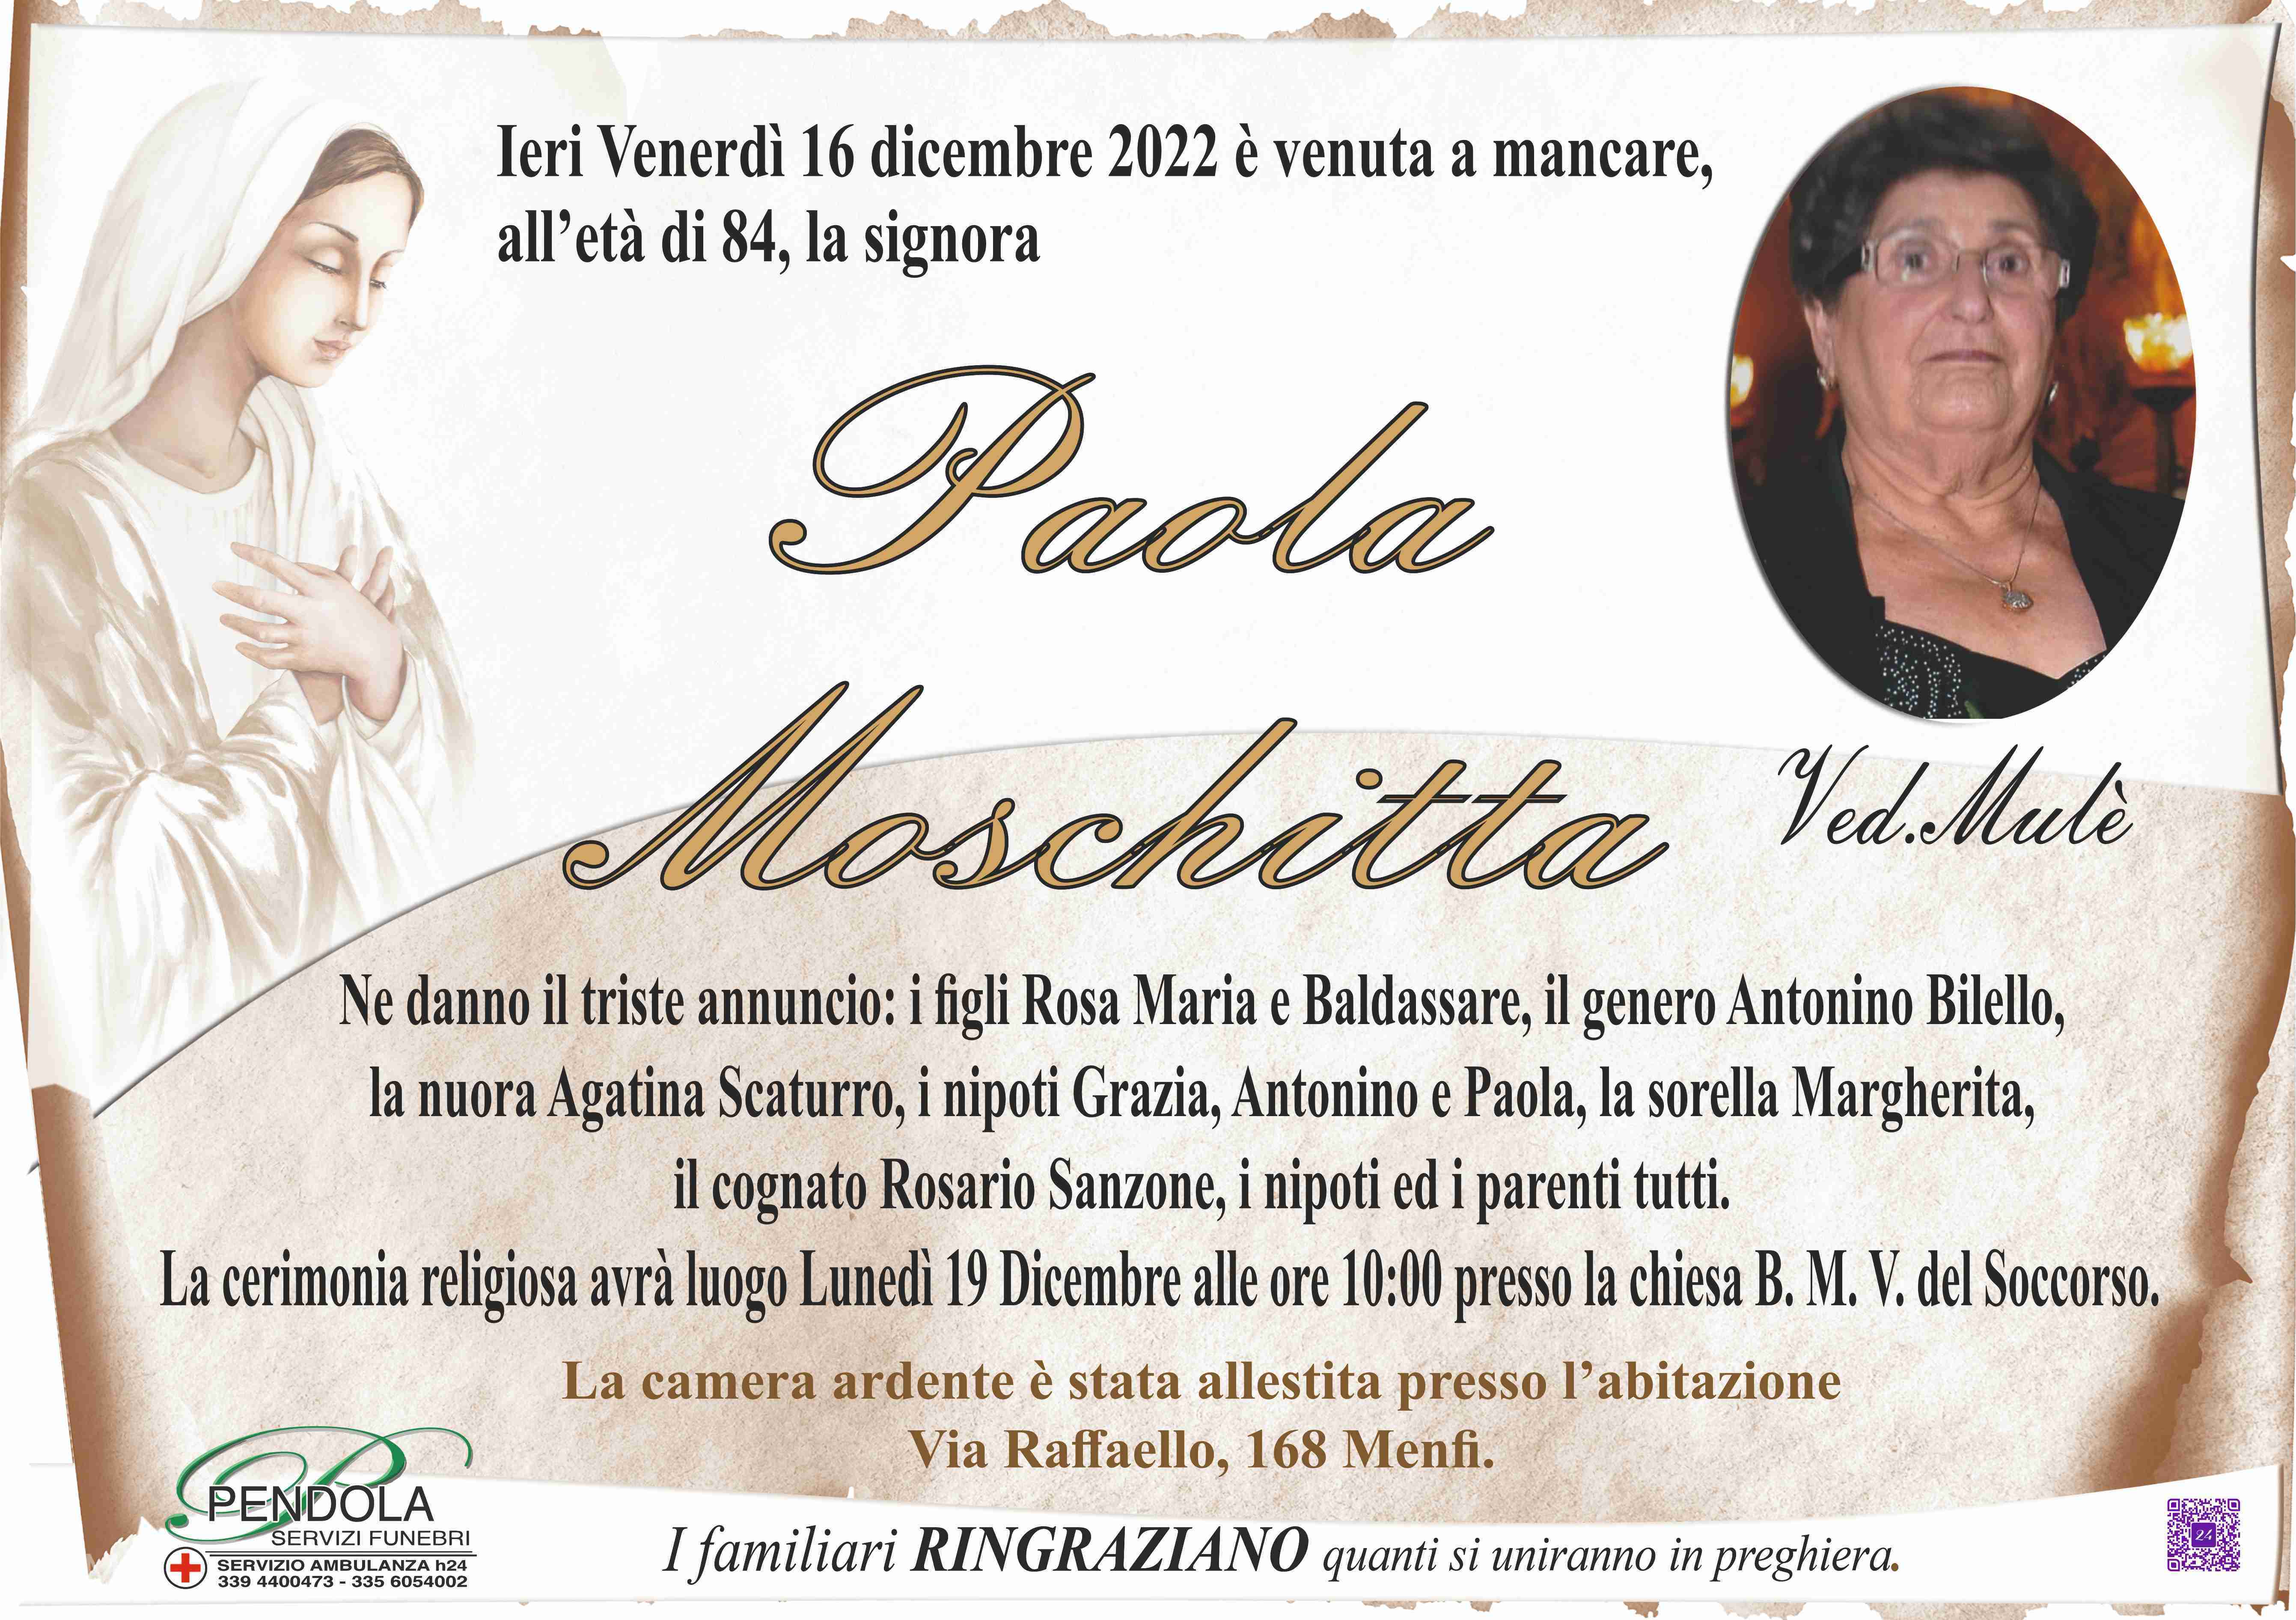 Paola Maschitta